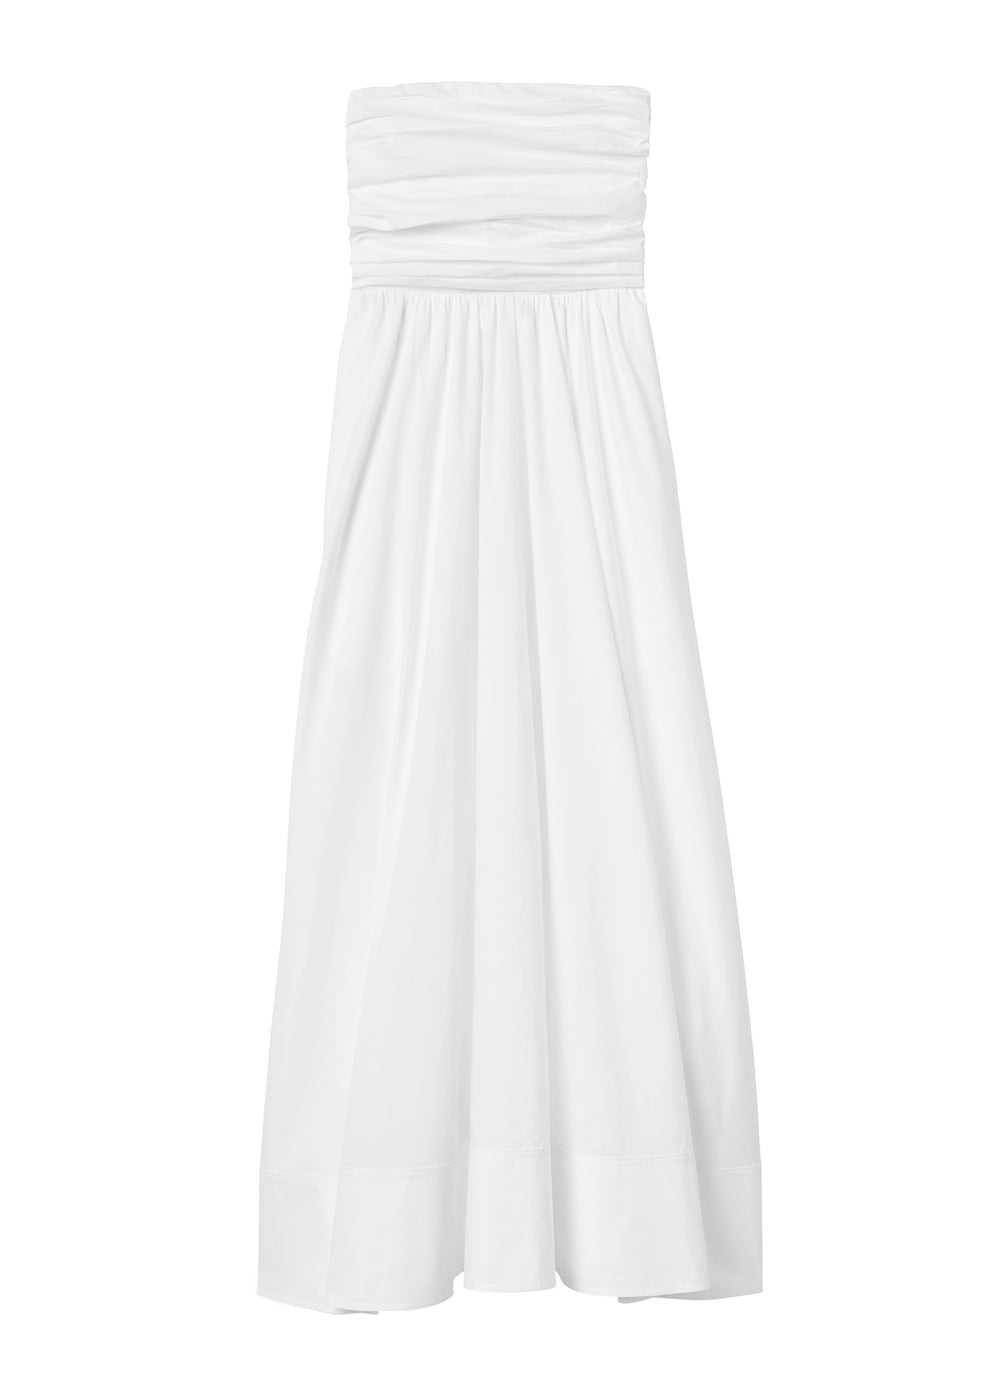 flatlay of white strapless midi dress